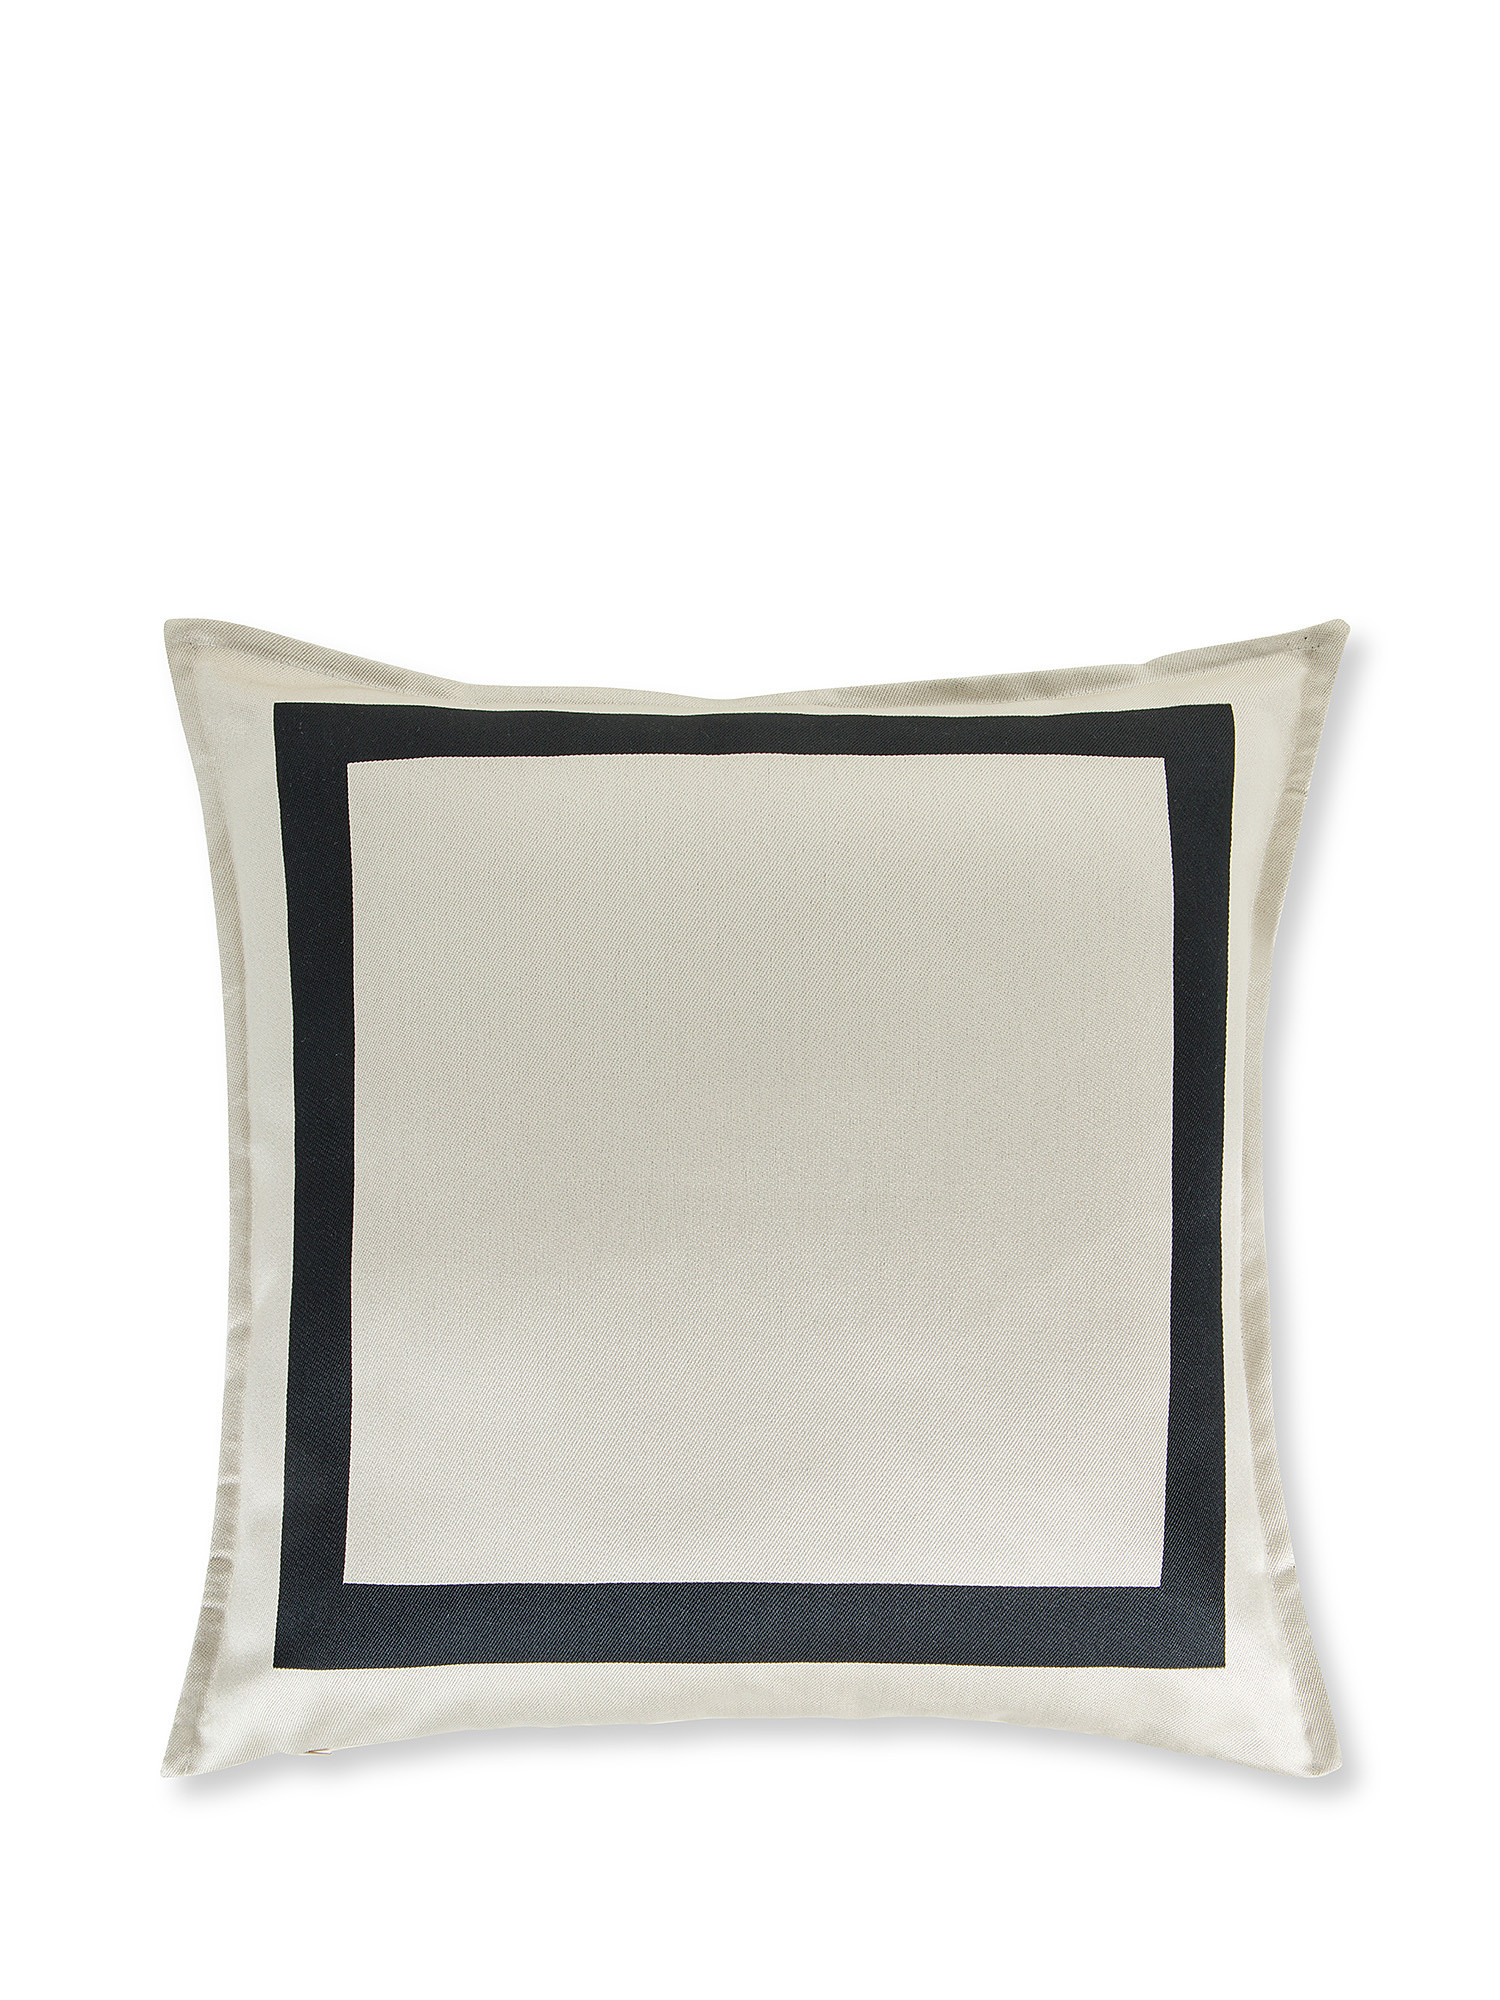 Cuscino tessuto motivo geometrico 50x50cm, Bianco, large image number 0